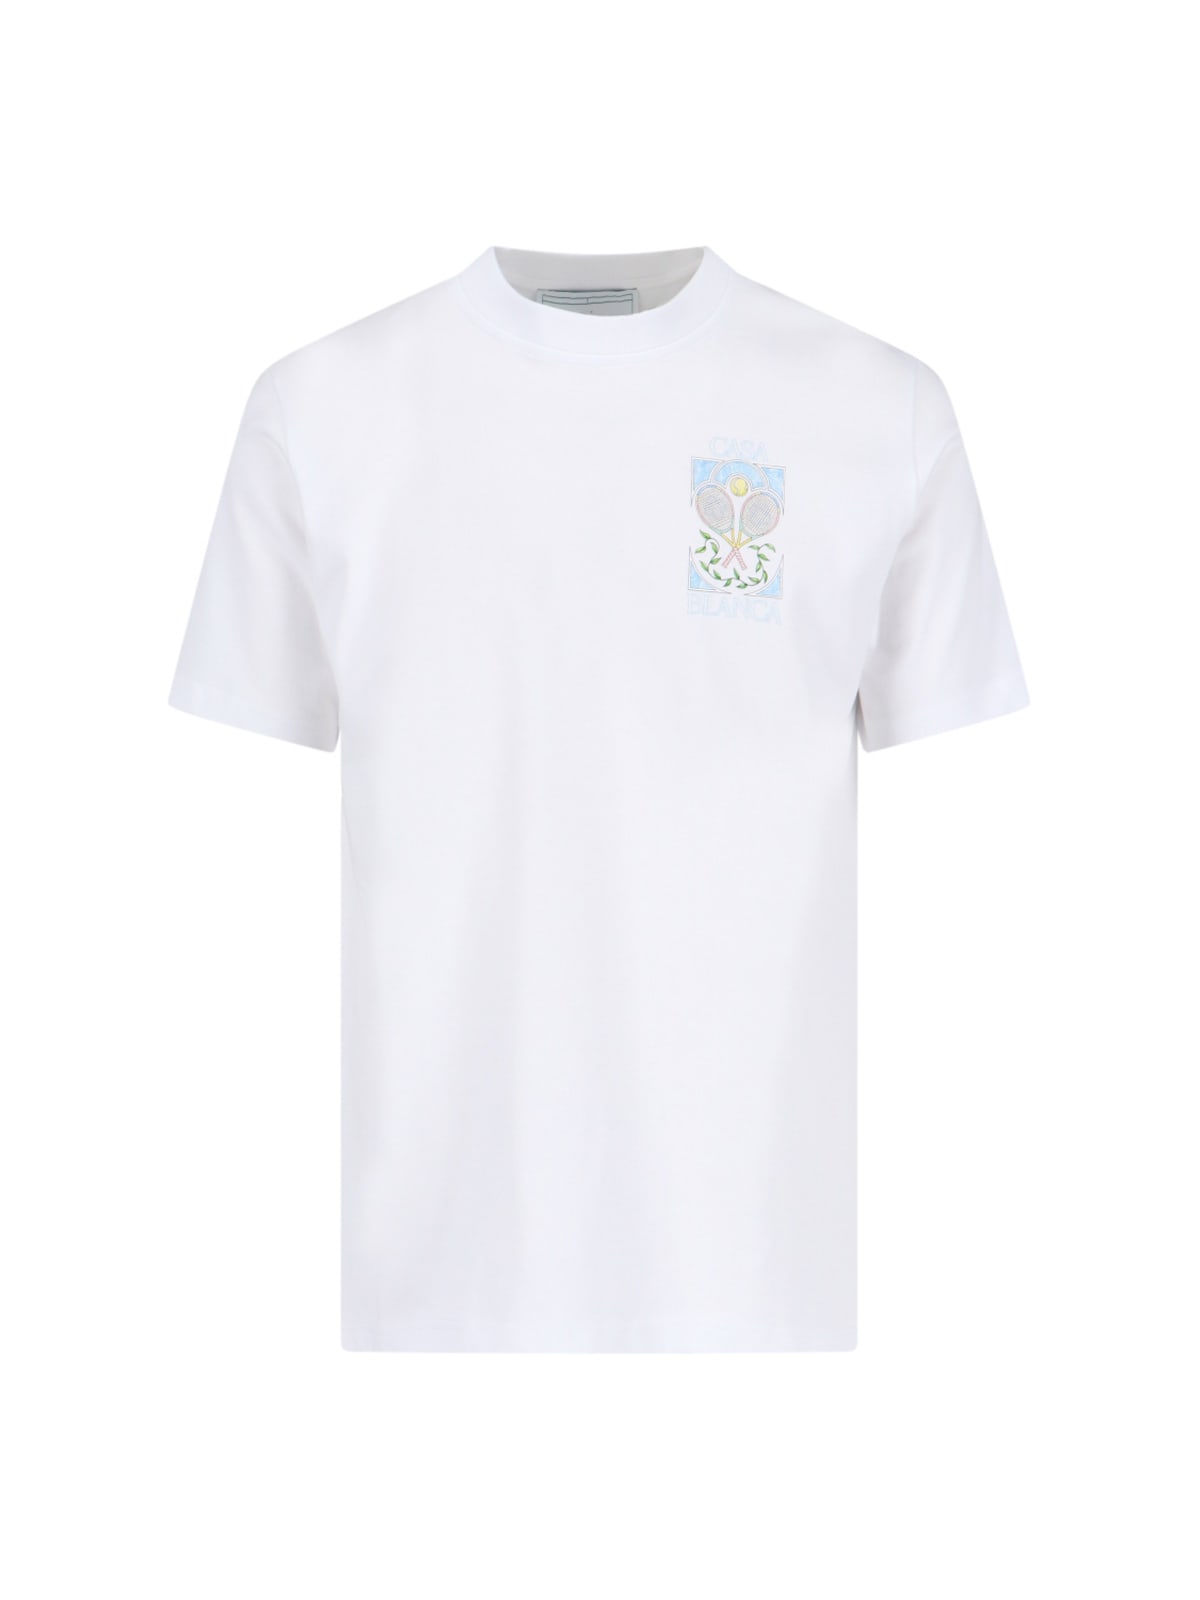 tennis Pastelle T-shirt